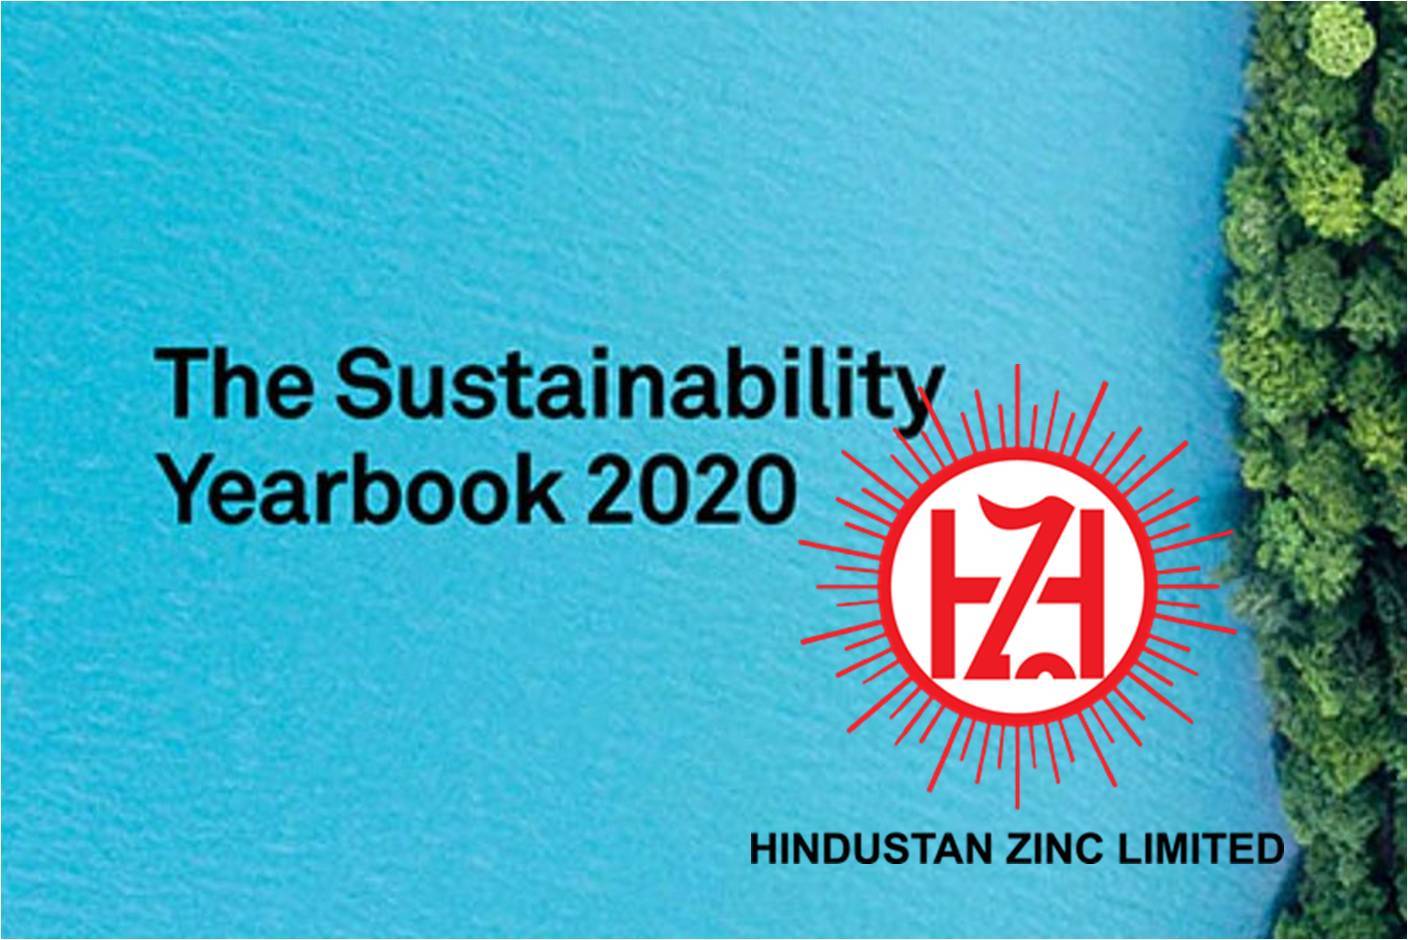 Hindustan Zinc featured in Sustainability Year Book 2020